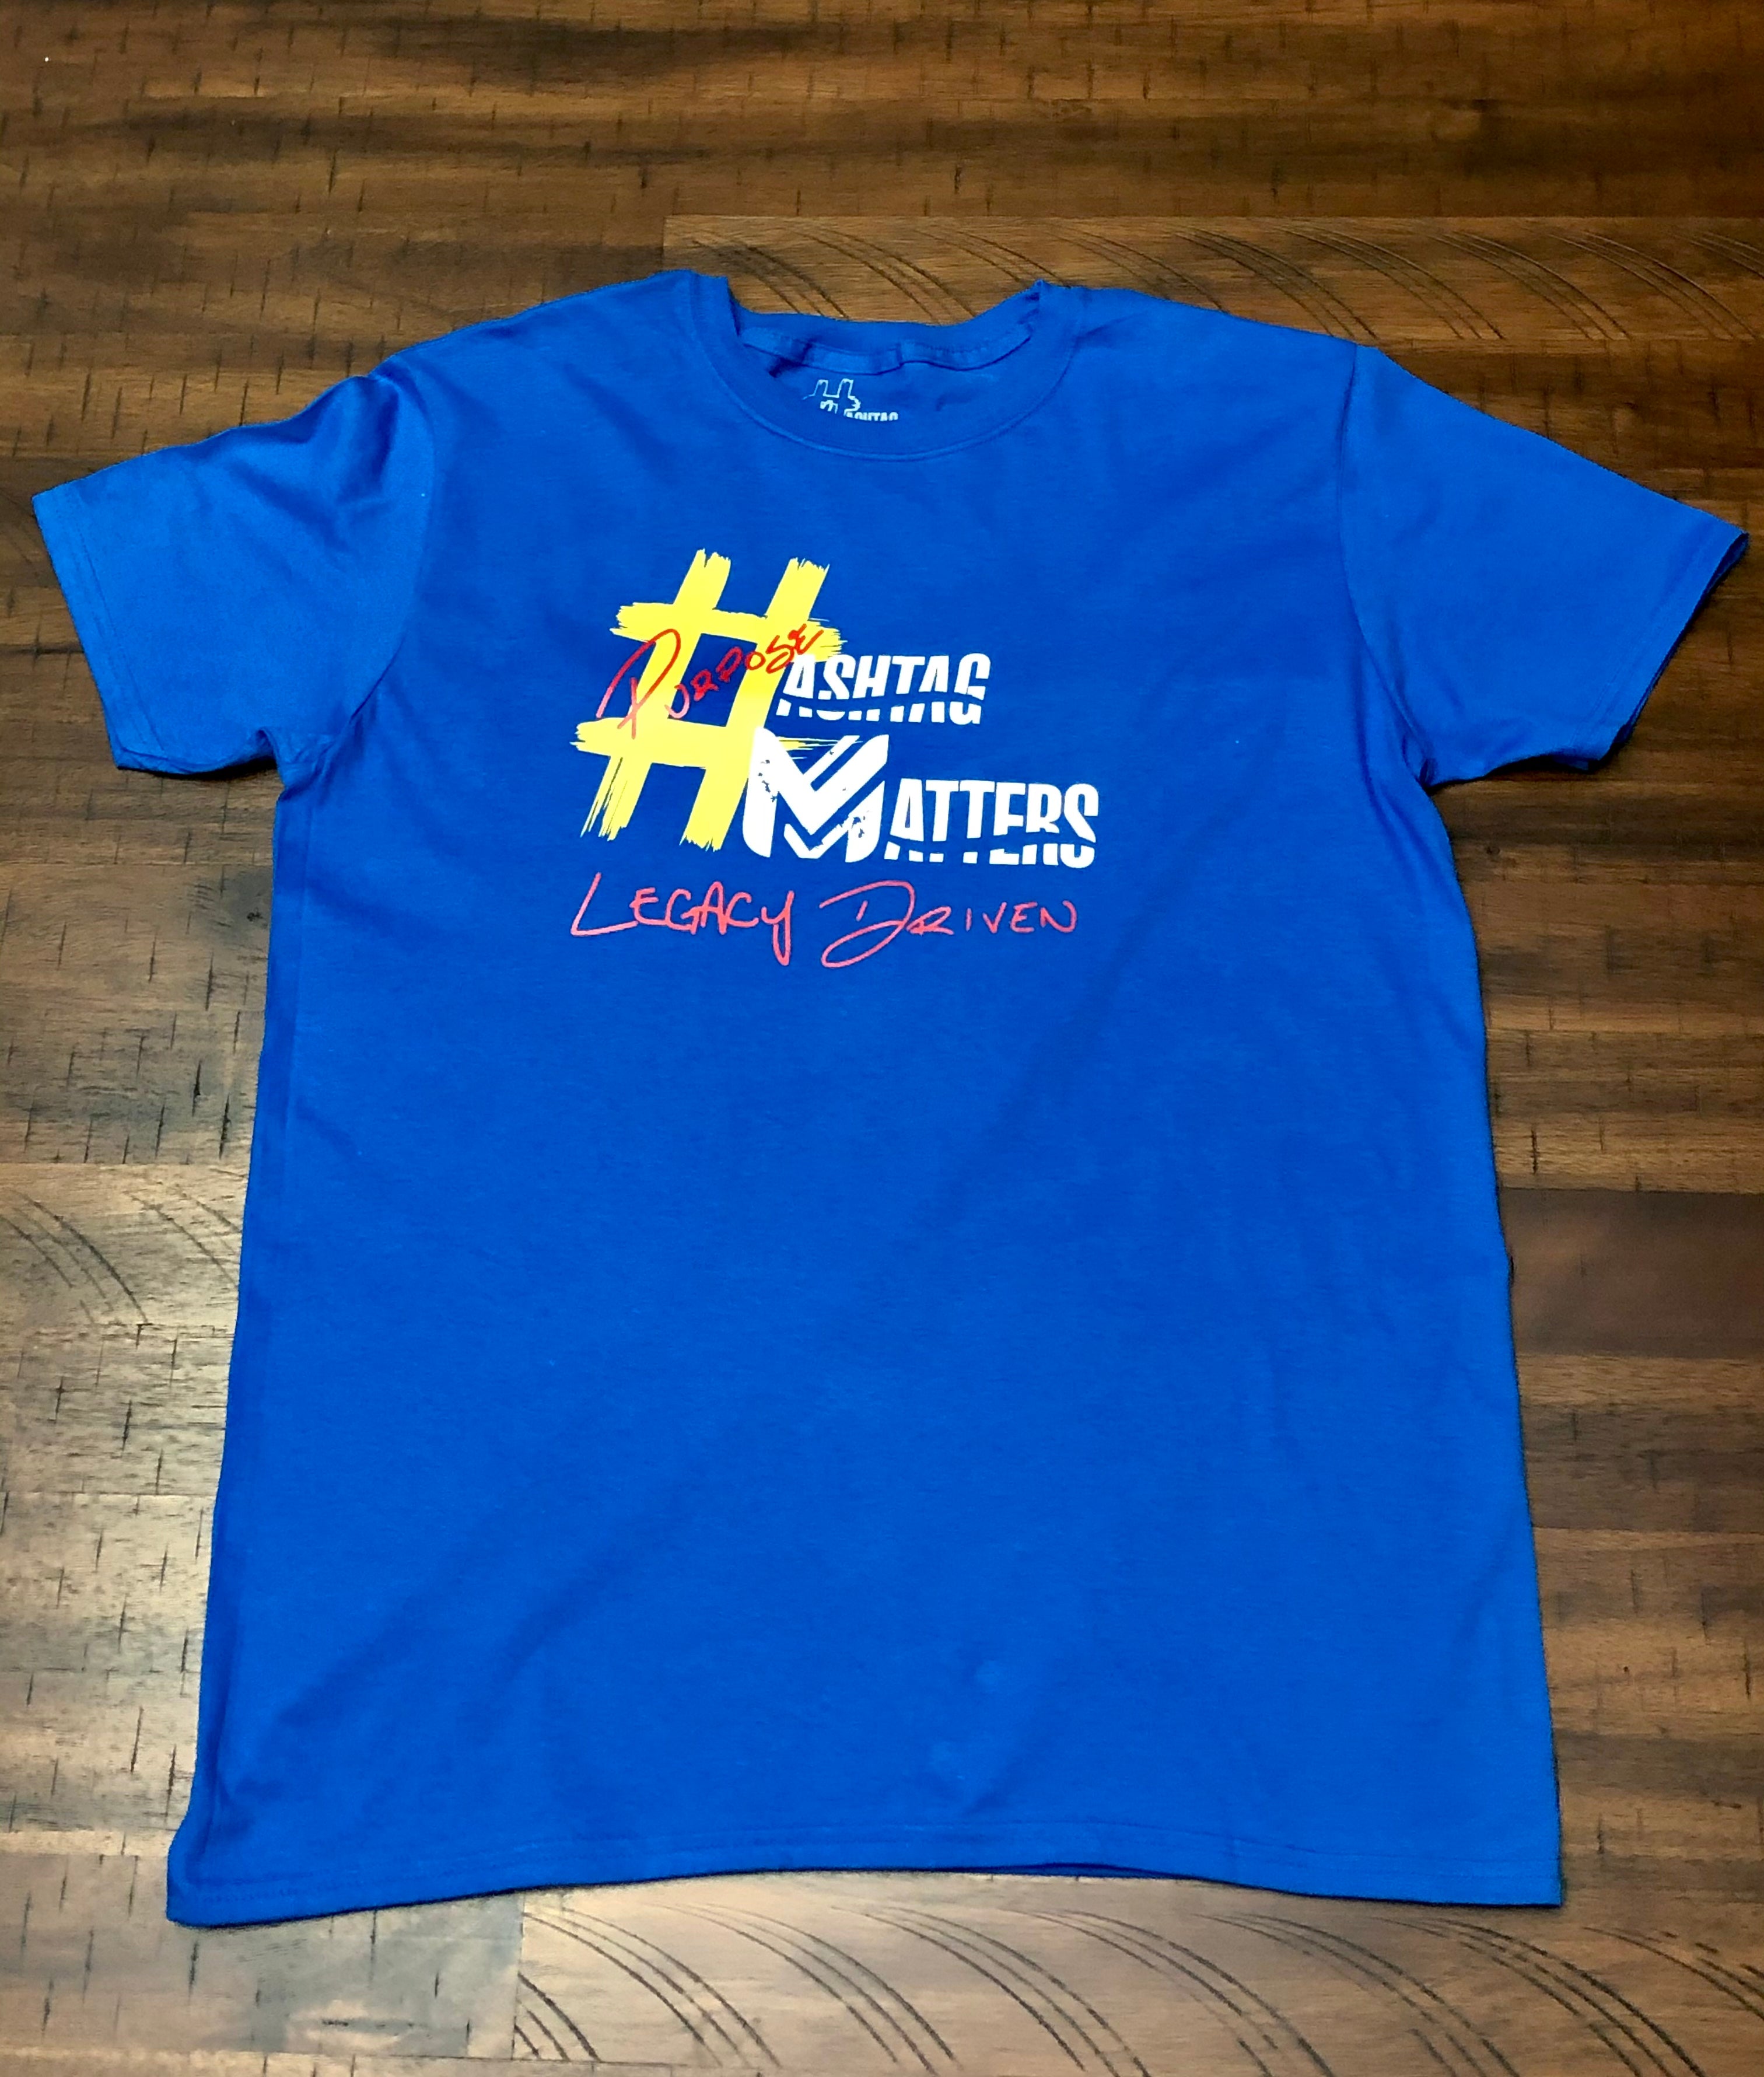 Hashtag Matters (Purpose / Legacy Driven) T-Shirt